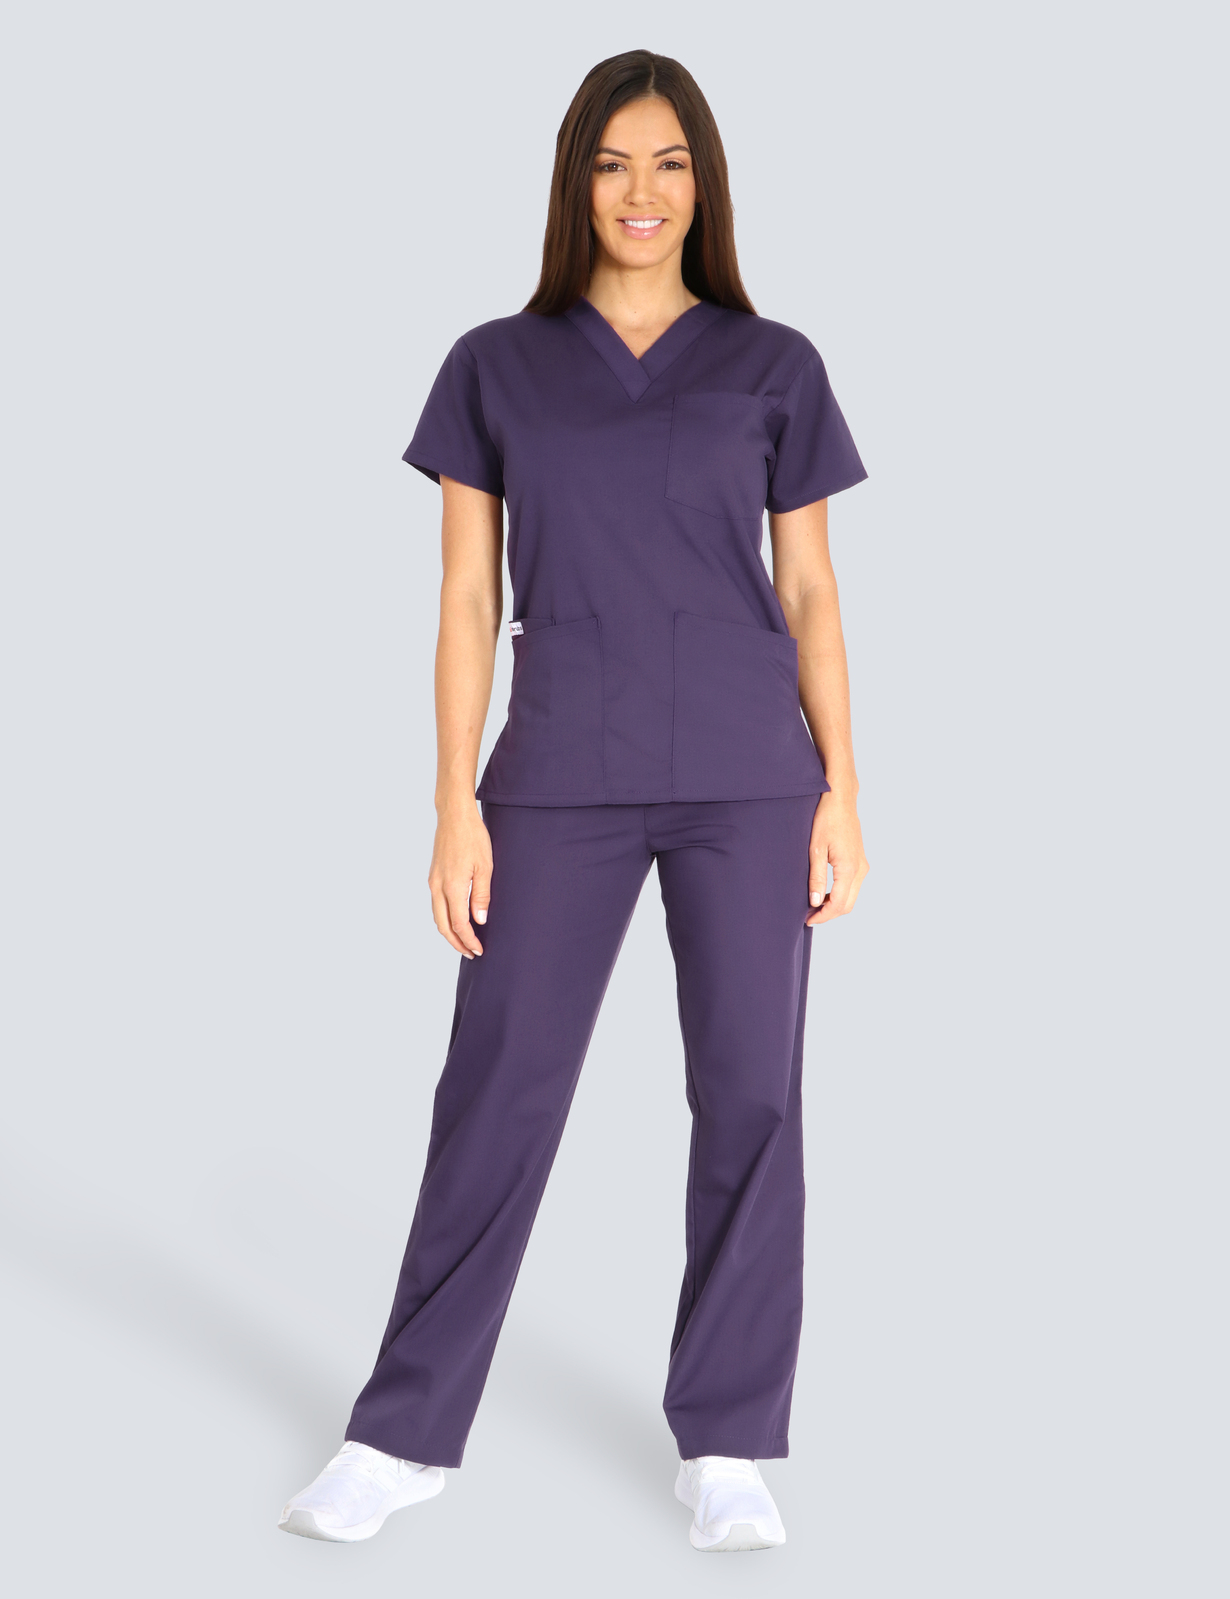 Redland Hospital - Medical Imaging (4 Pocket Scrub Top and Cargo Pants in Aubergine incl Logos)